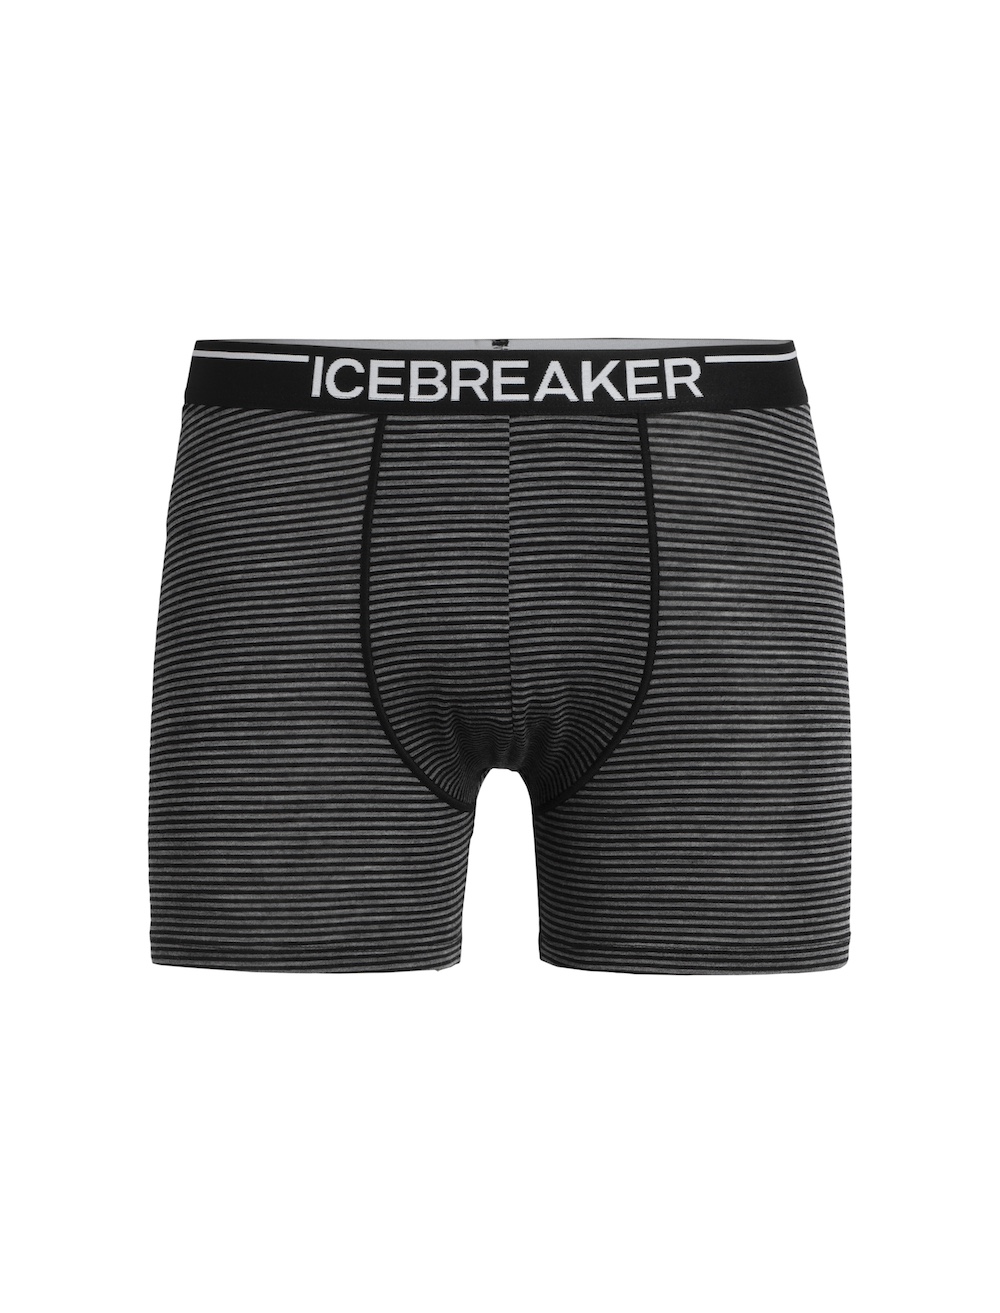 Icebreaker - Merino Anatomica Boxershorts Herren, Unterhose